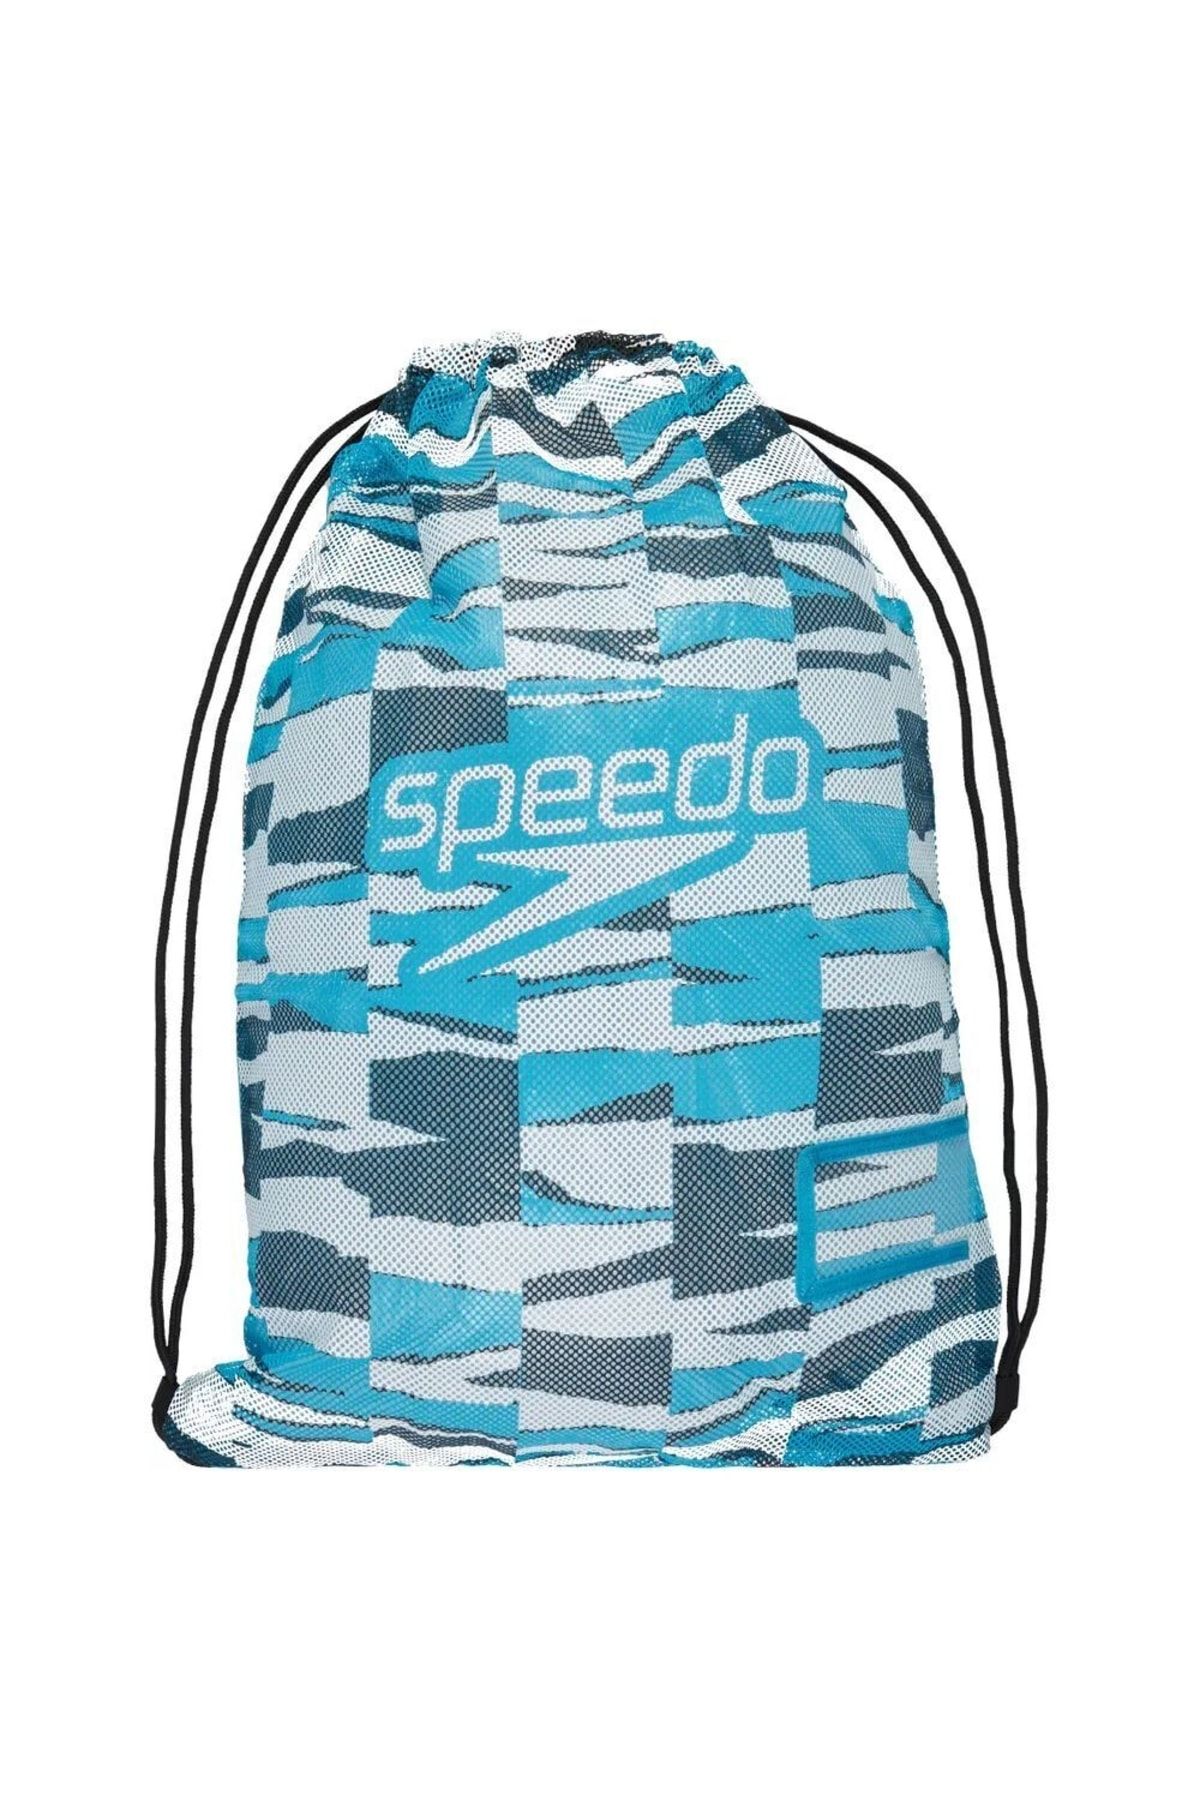 SPEEDO Printed Mesh Bag (m/s)